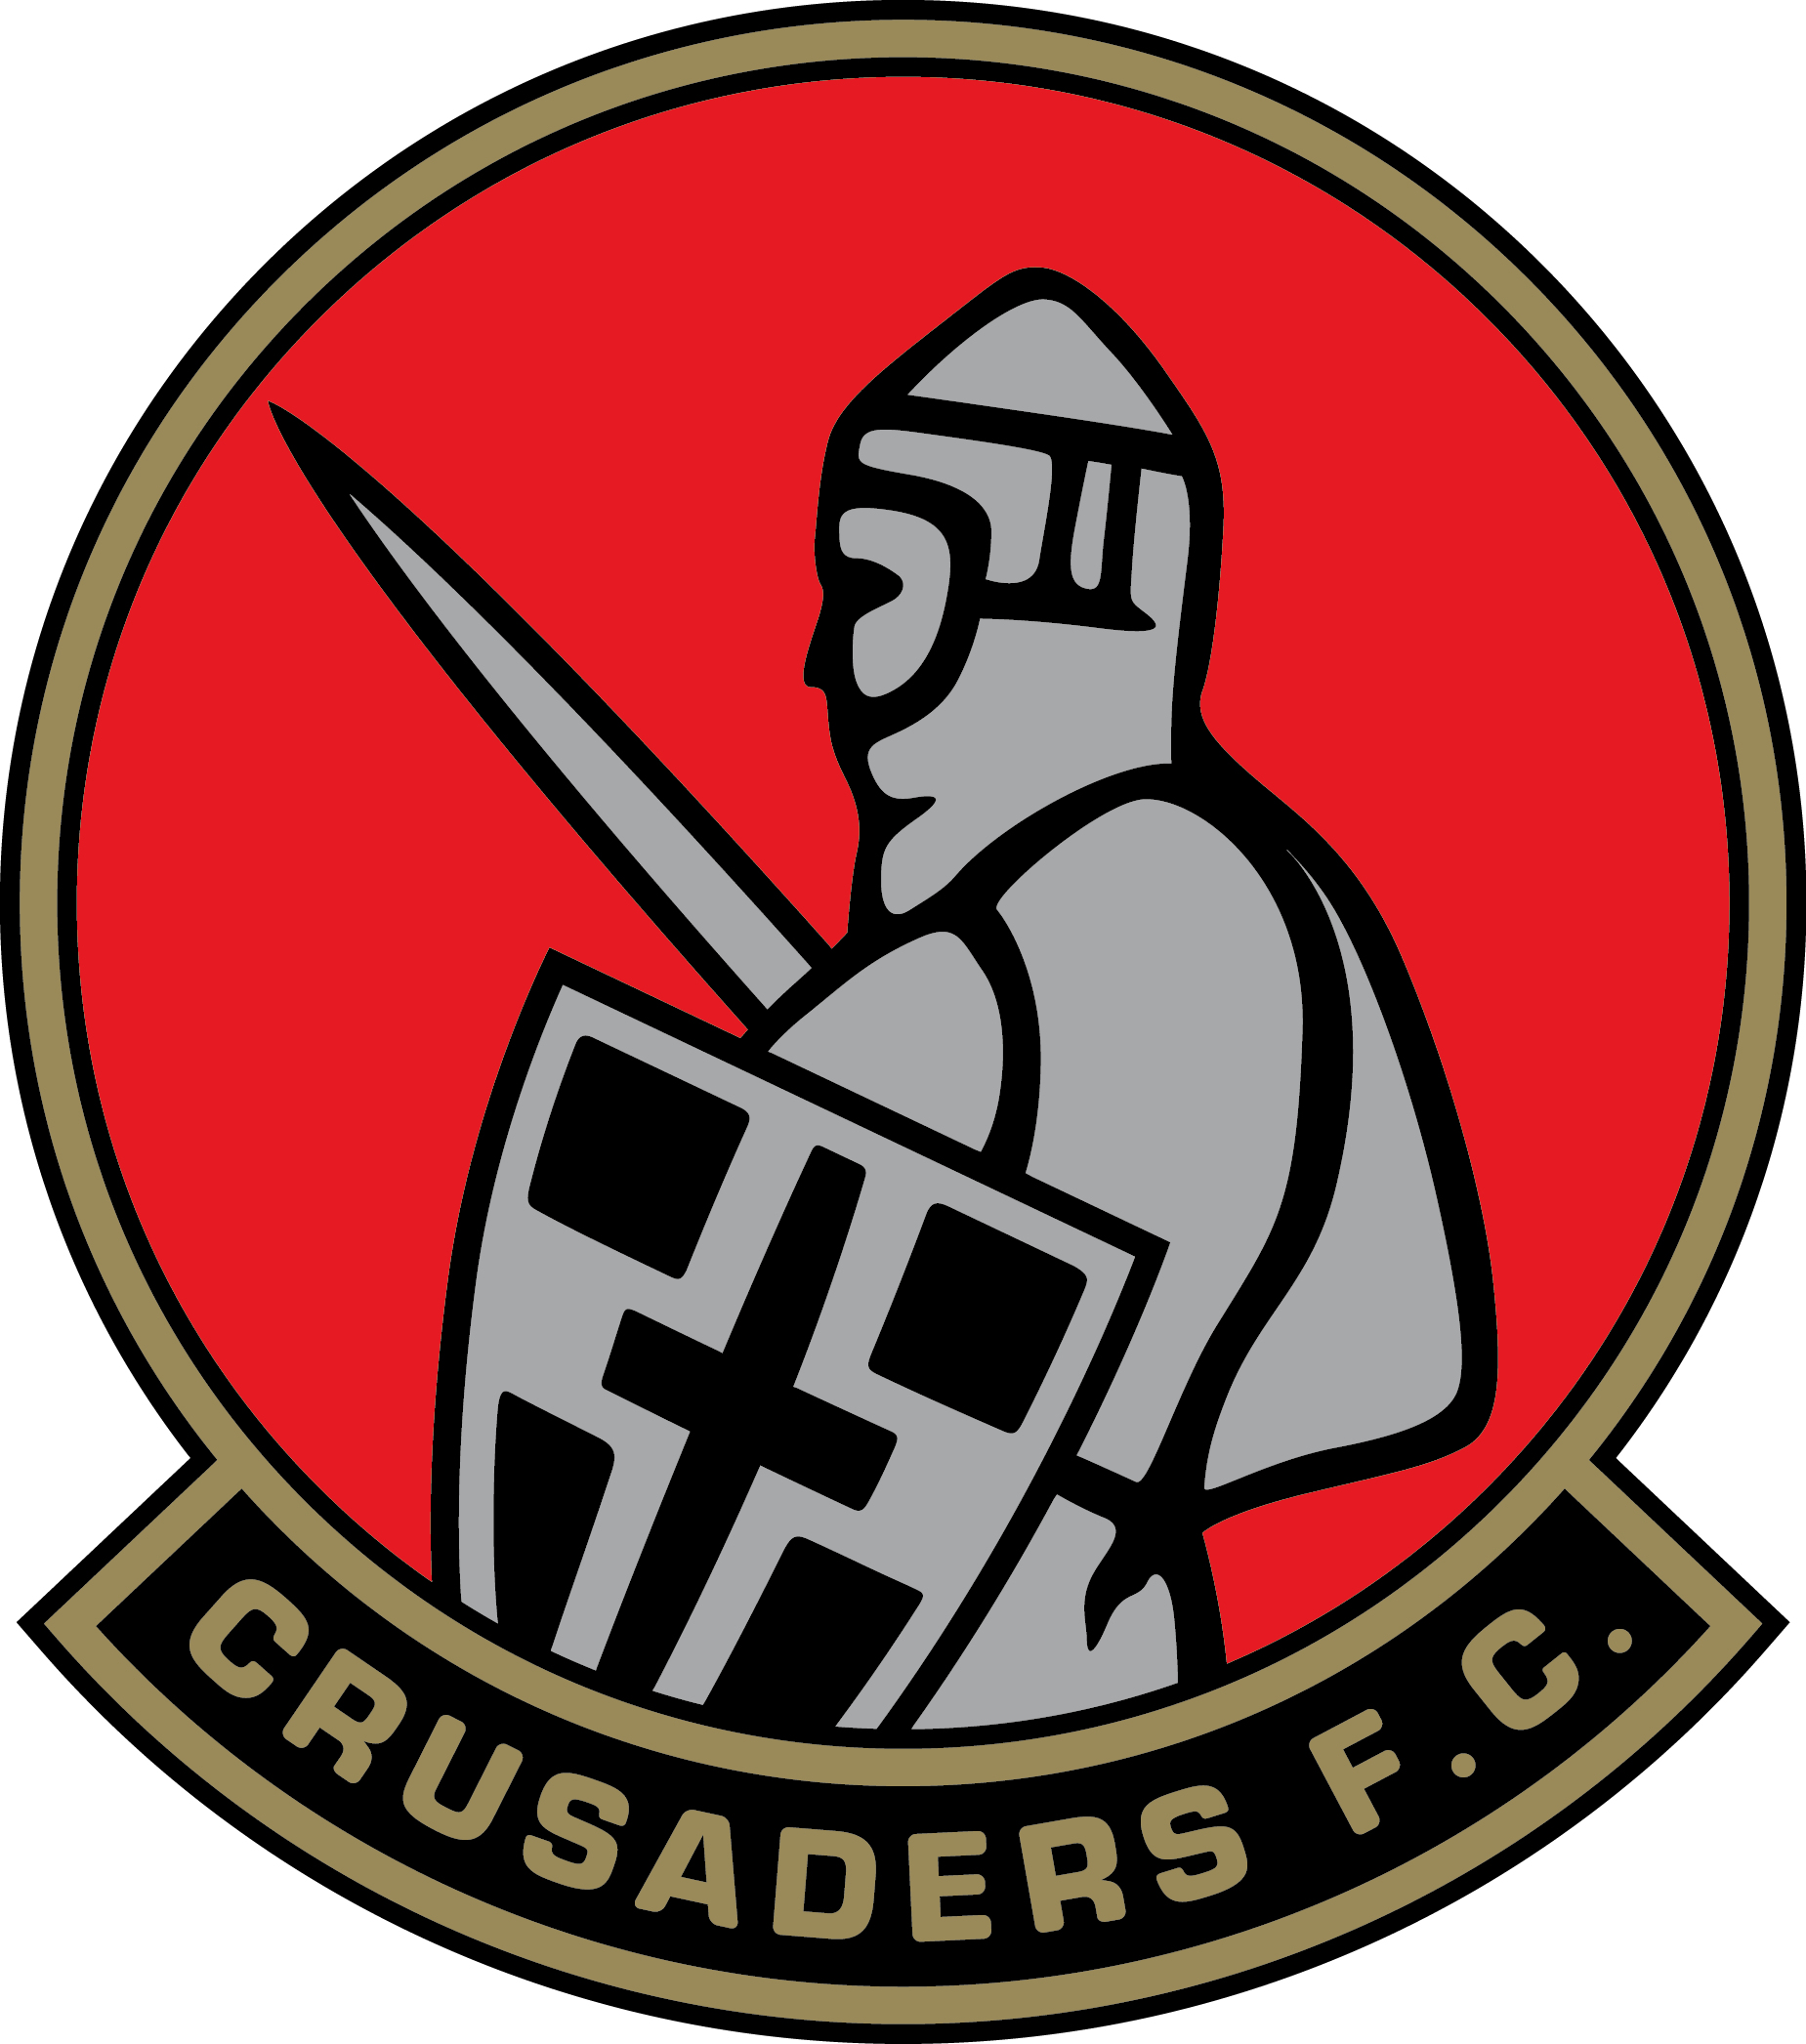 Crusaders Soccer Logo - FC Crusaders Belfast | Football Logo | British football, Football ...